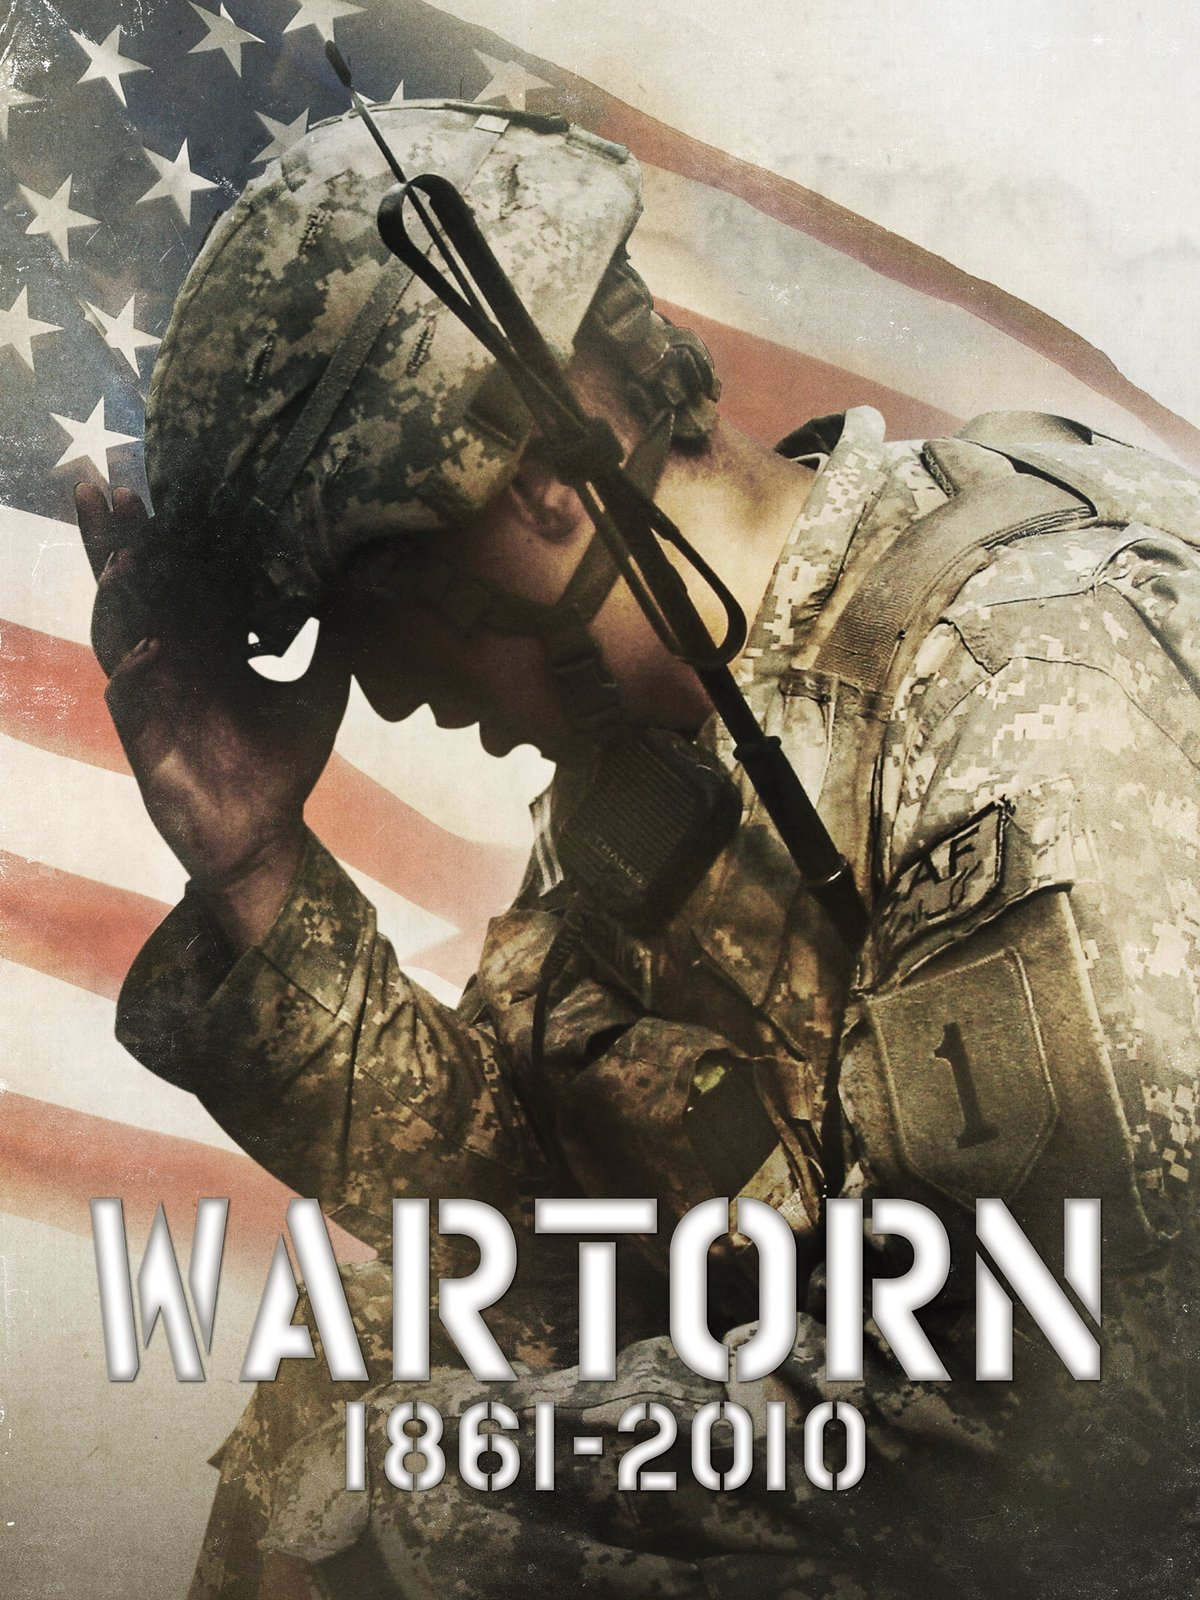 Wartorn, 1861-2010